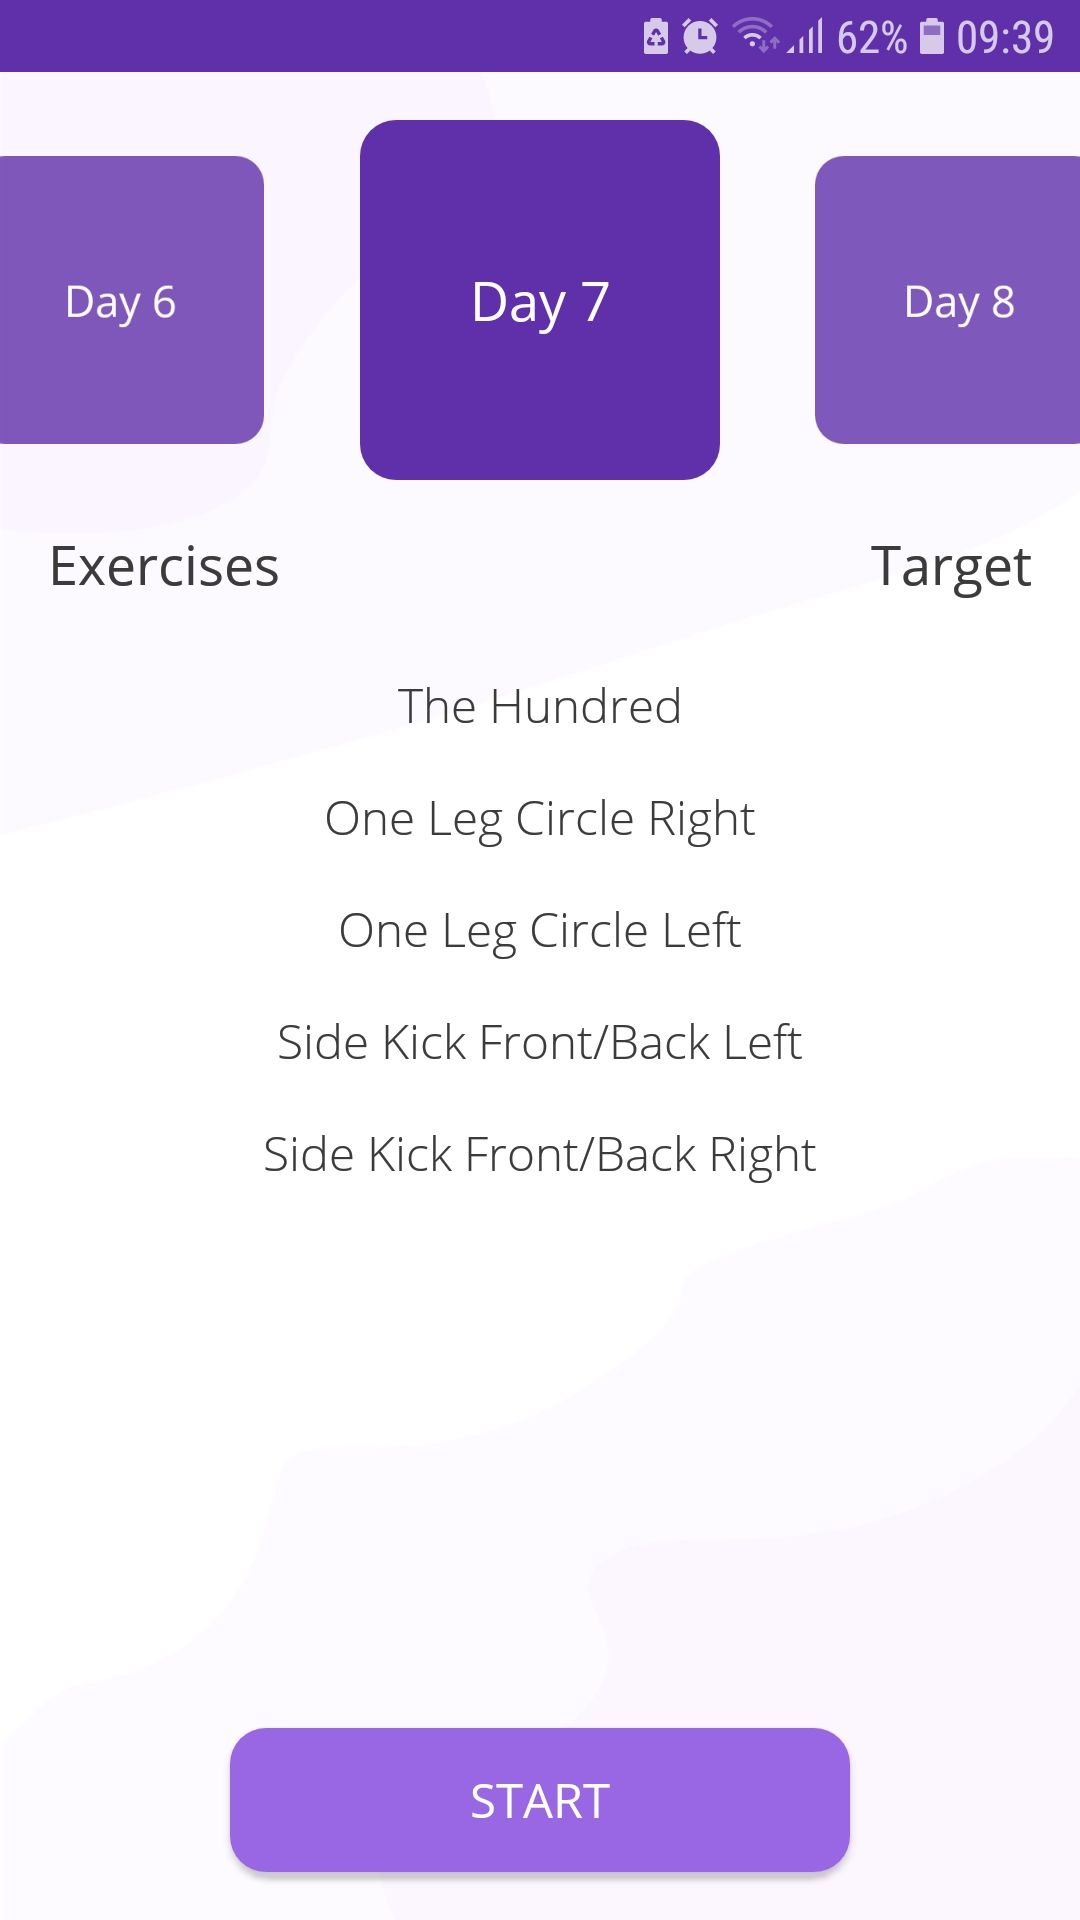 5 minute Pilates mobile fitness app exercises